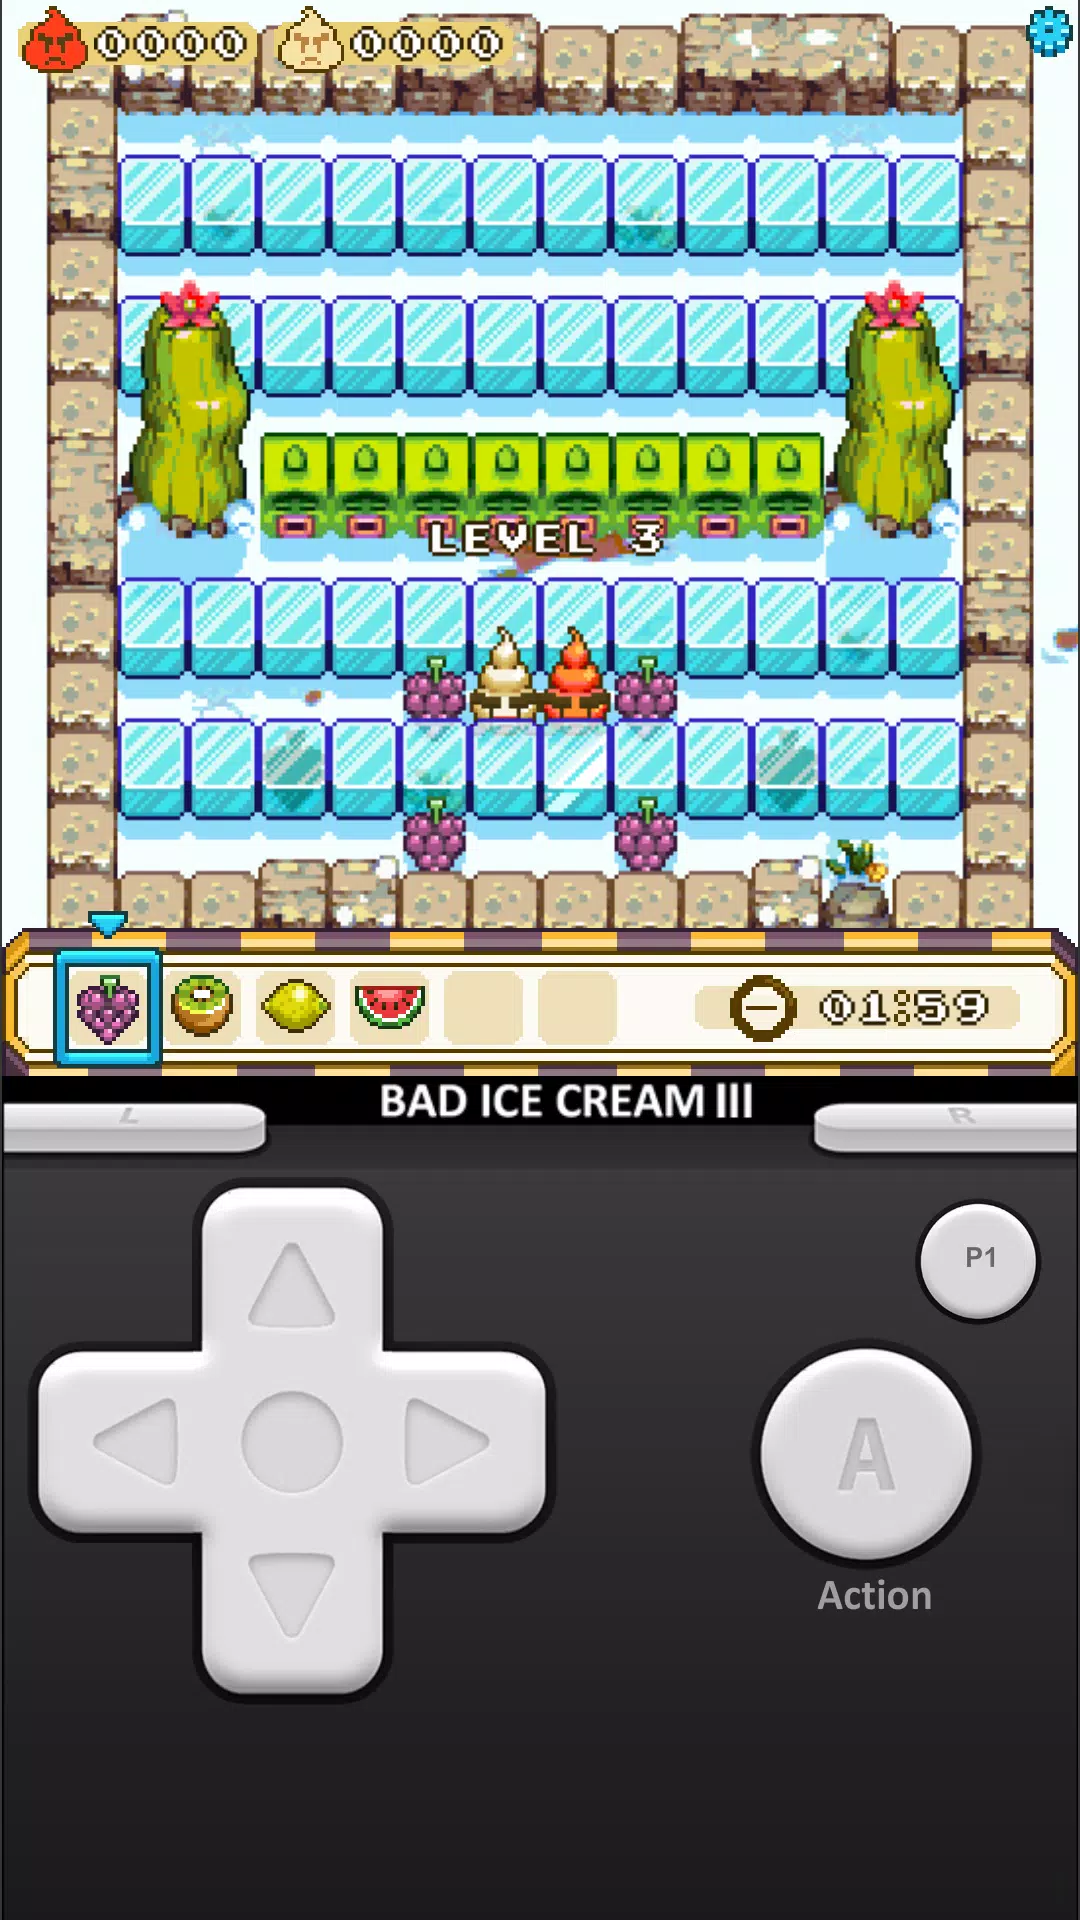 Play games Bad Ice Cream, #badicecream3 #bad_ice_cream_3 ##…